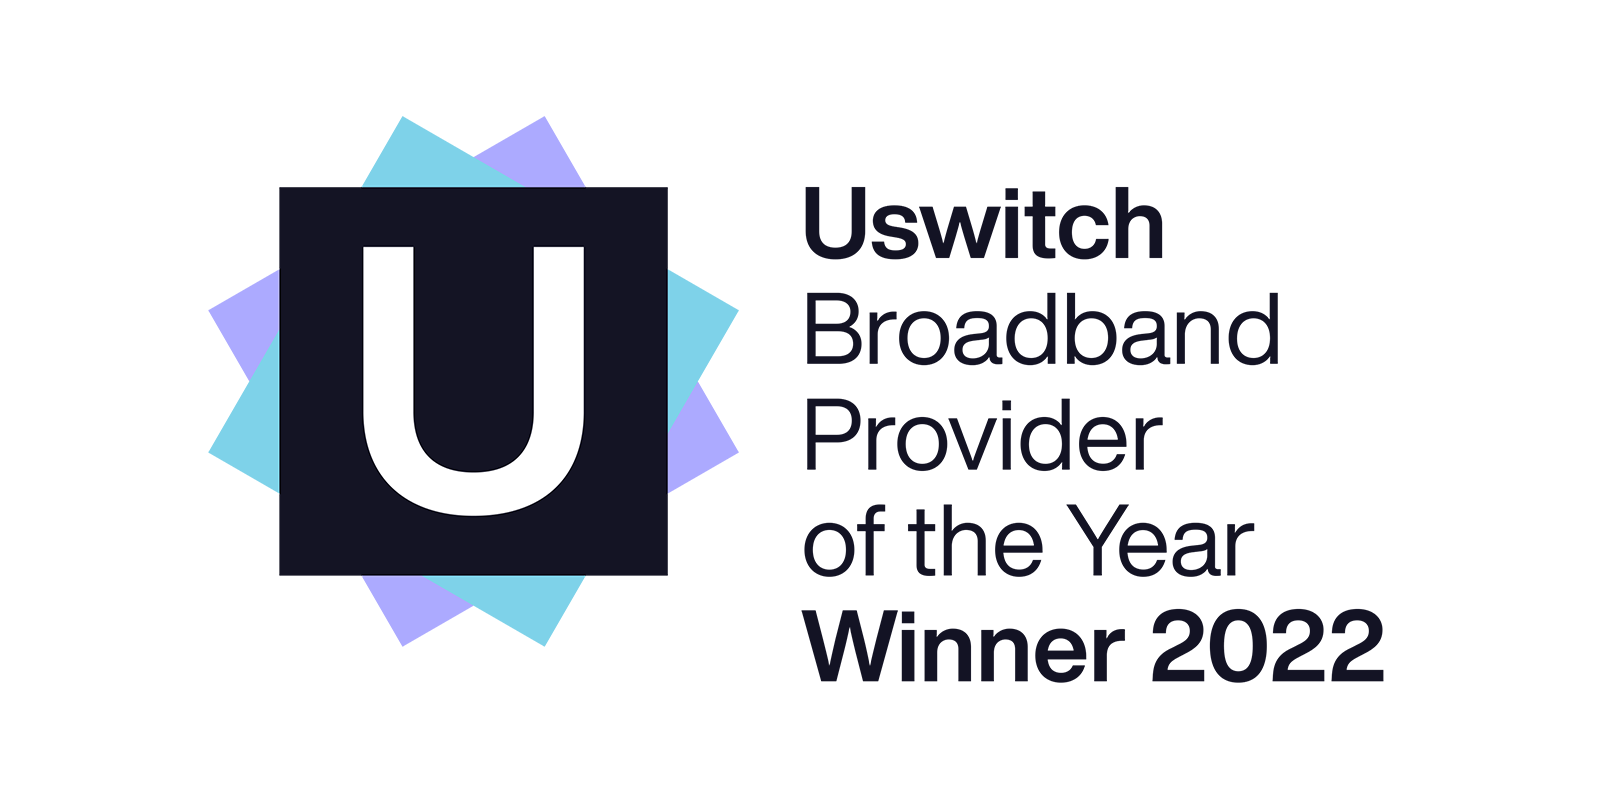 broadband provider of the year